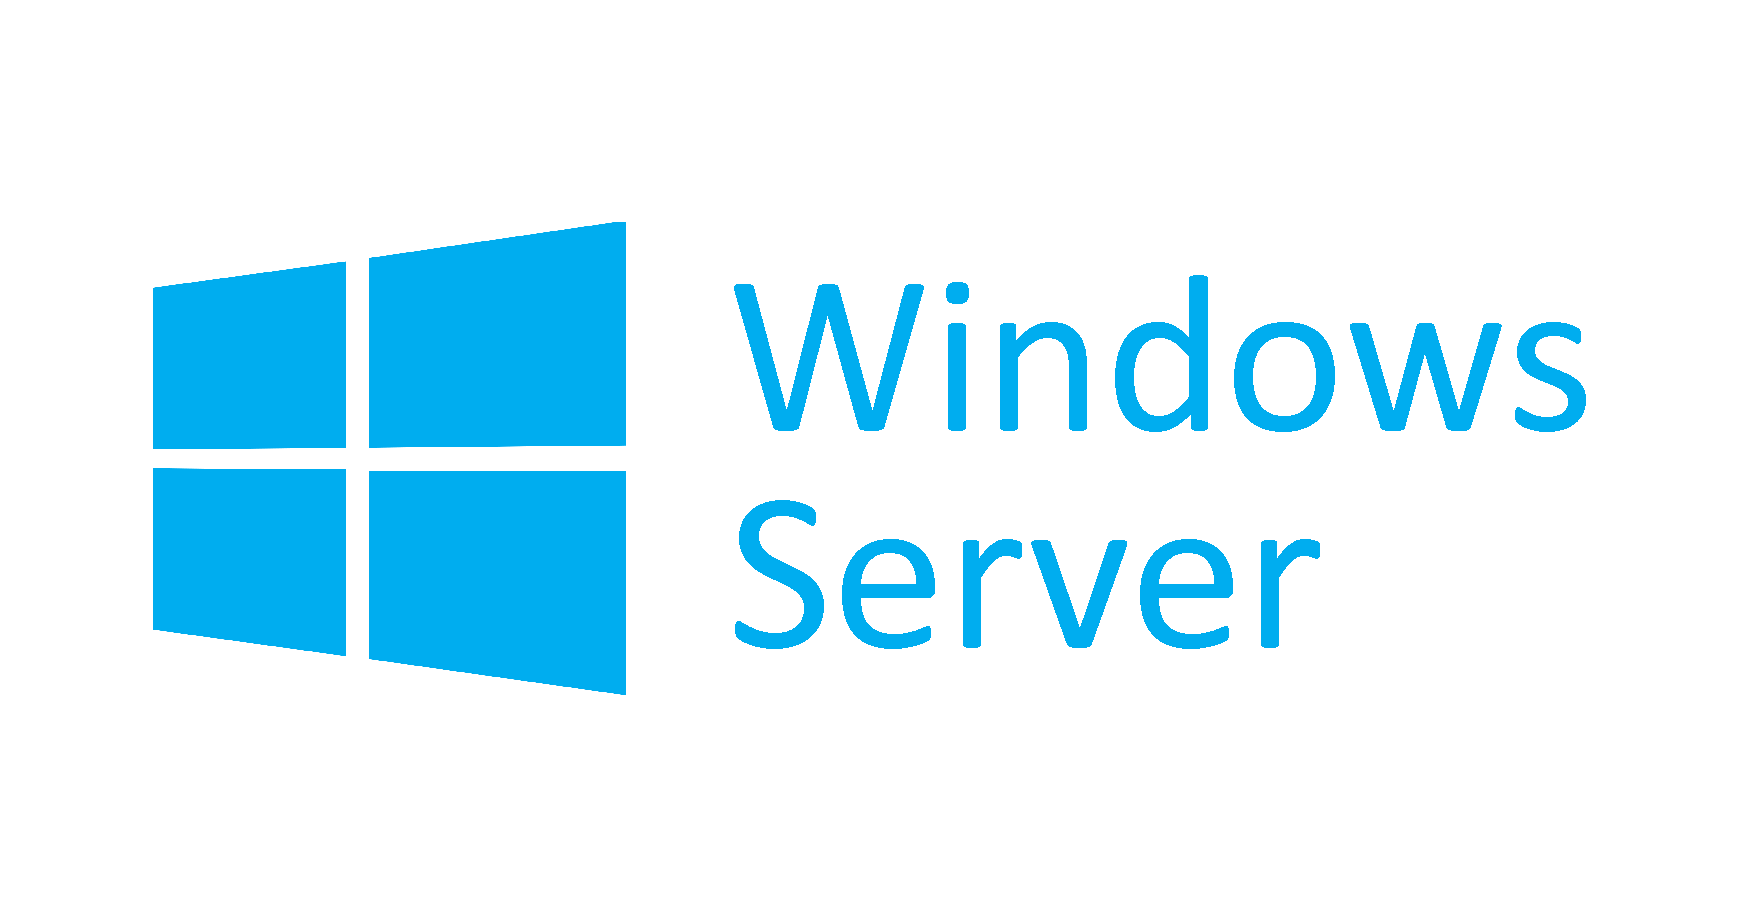 Microsoft Windows Server Logo - Microsoft Risc&259 S&259 Bu&537easc&259 &537i Windows Server Prin